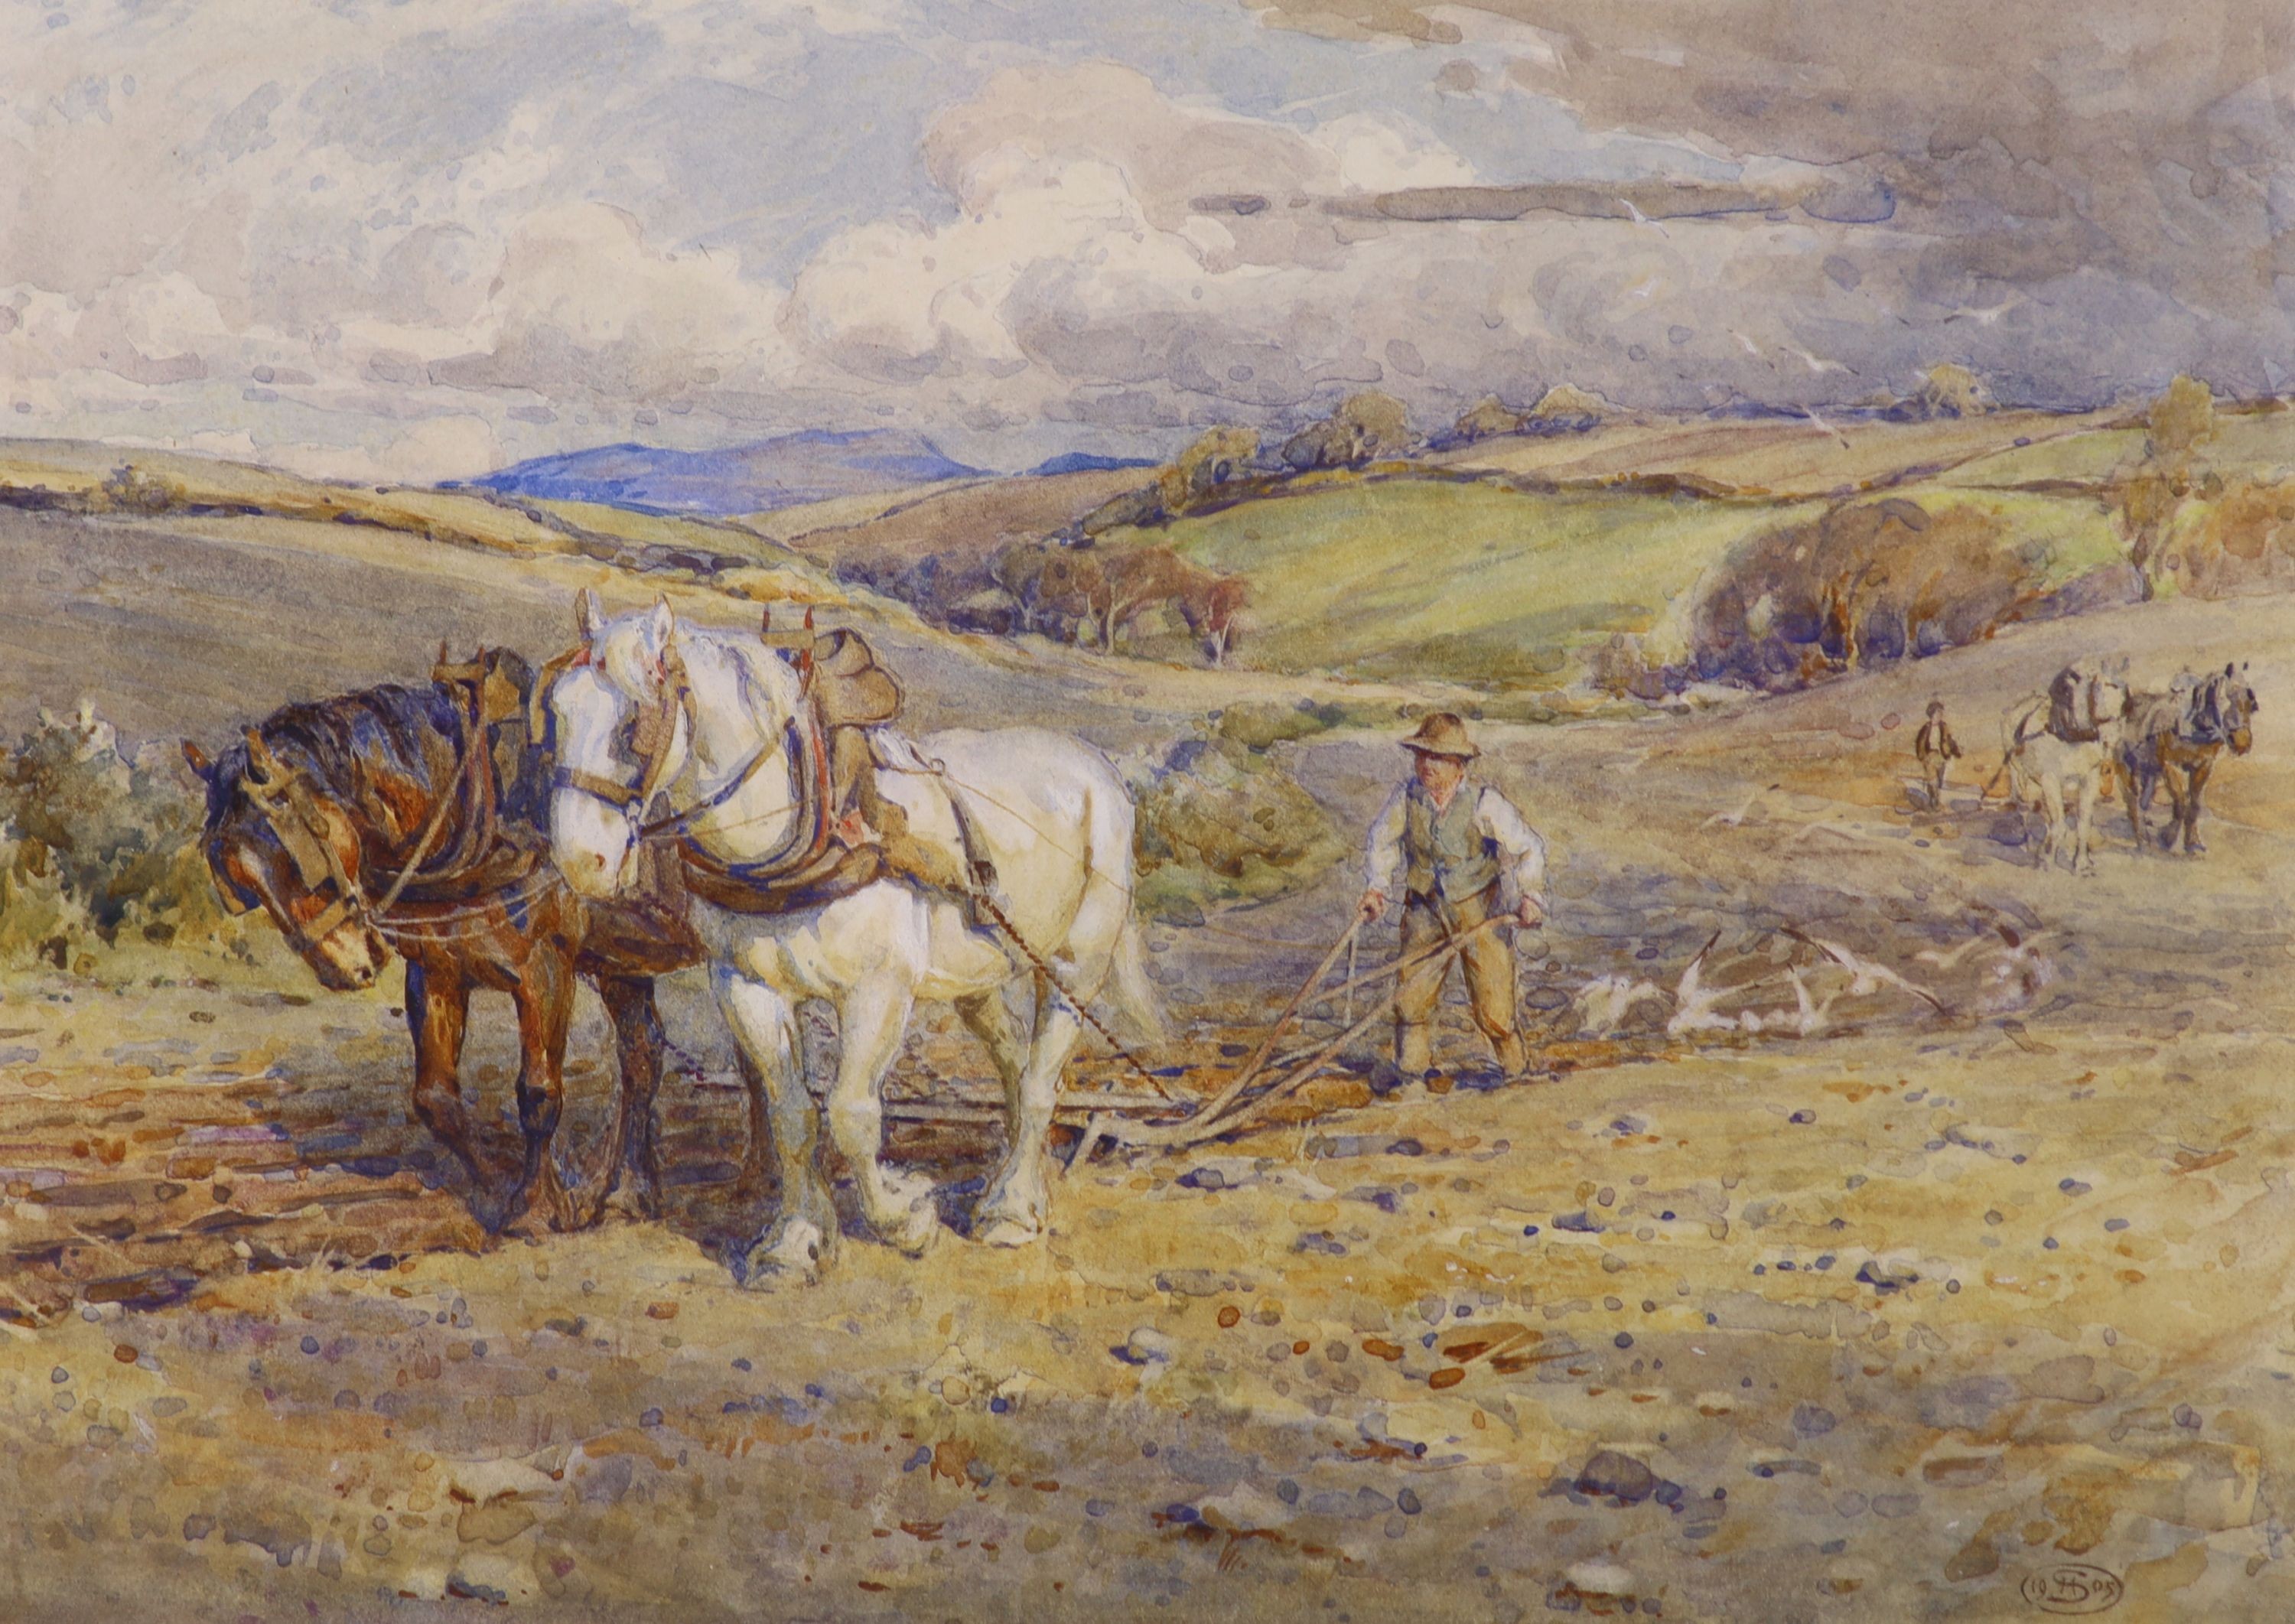 Joseph Harold Swanwick (1866-1929), 'Ploughing', pencil and watercolour, 18 x 25cm